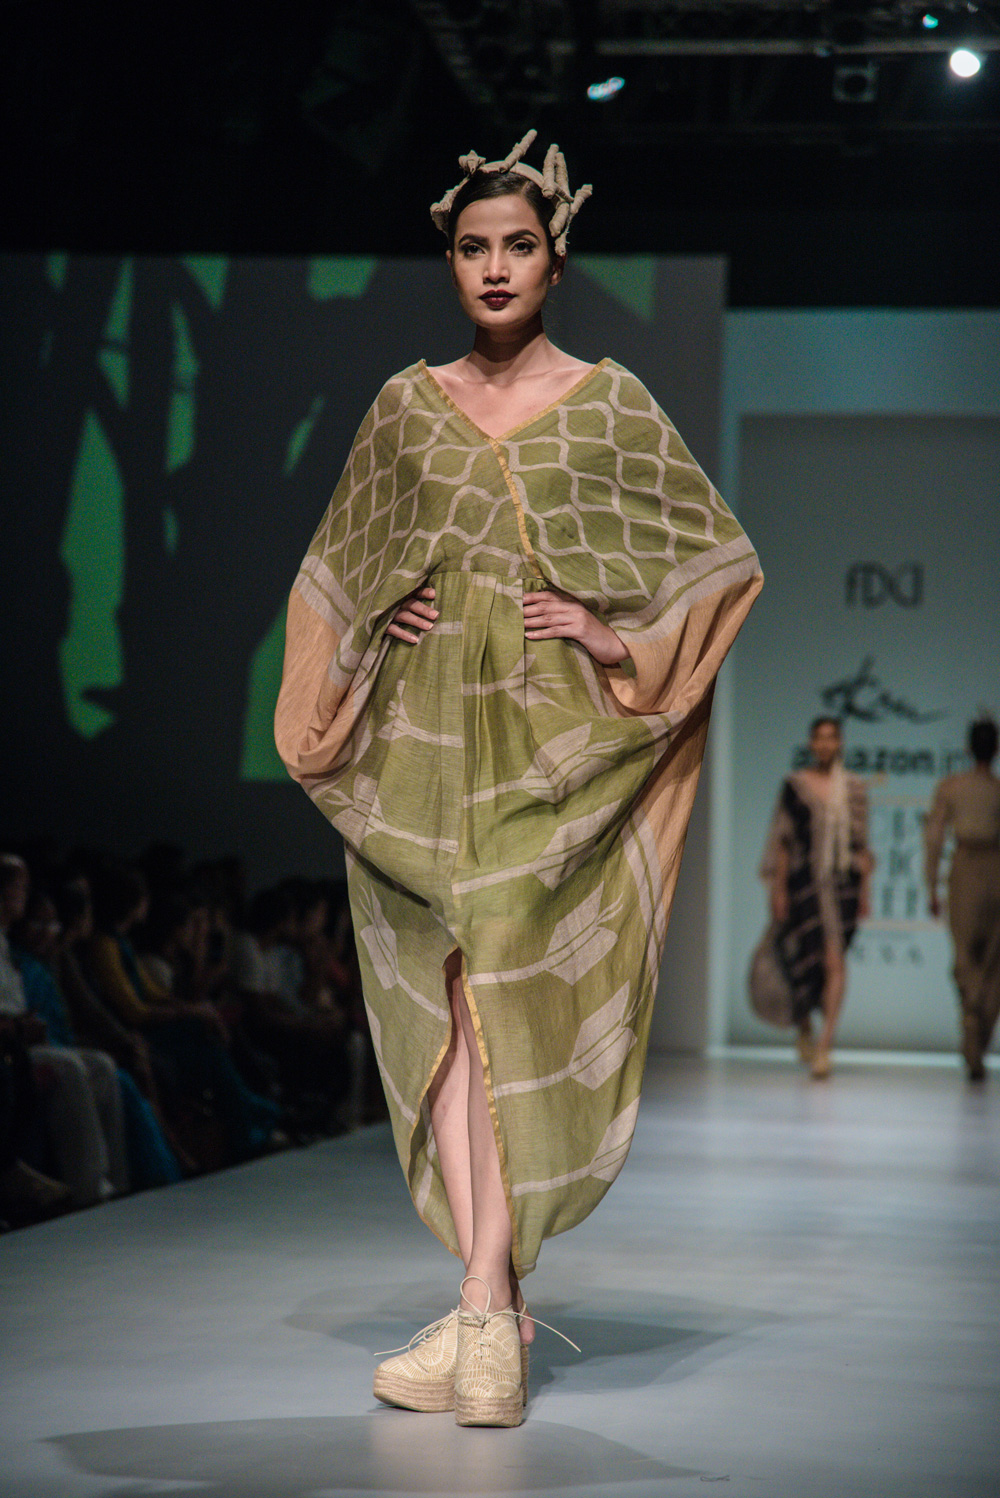 Ekru by Ektaa FDCI Amazon India Fashion Week Spring Summer 2018 Look 11